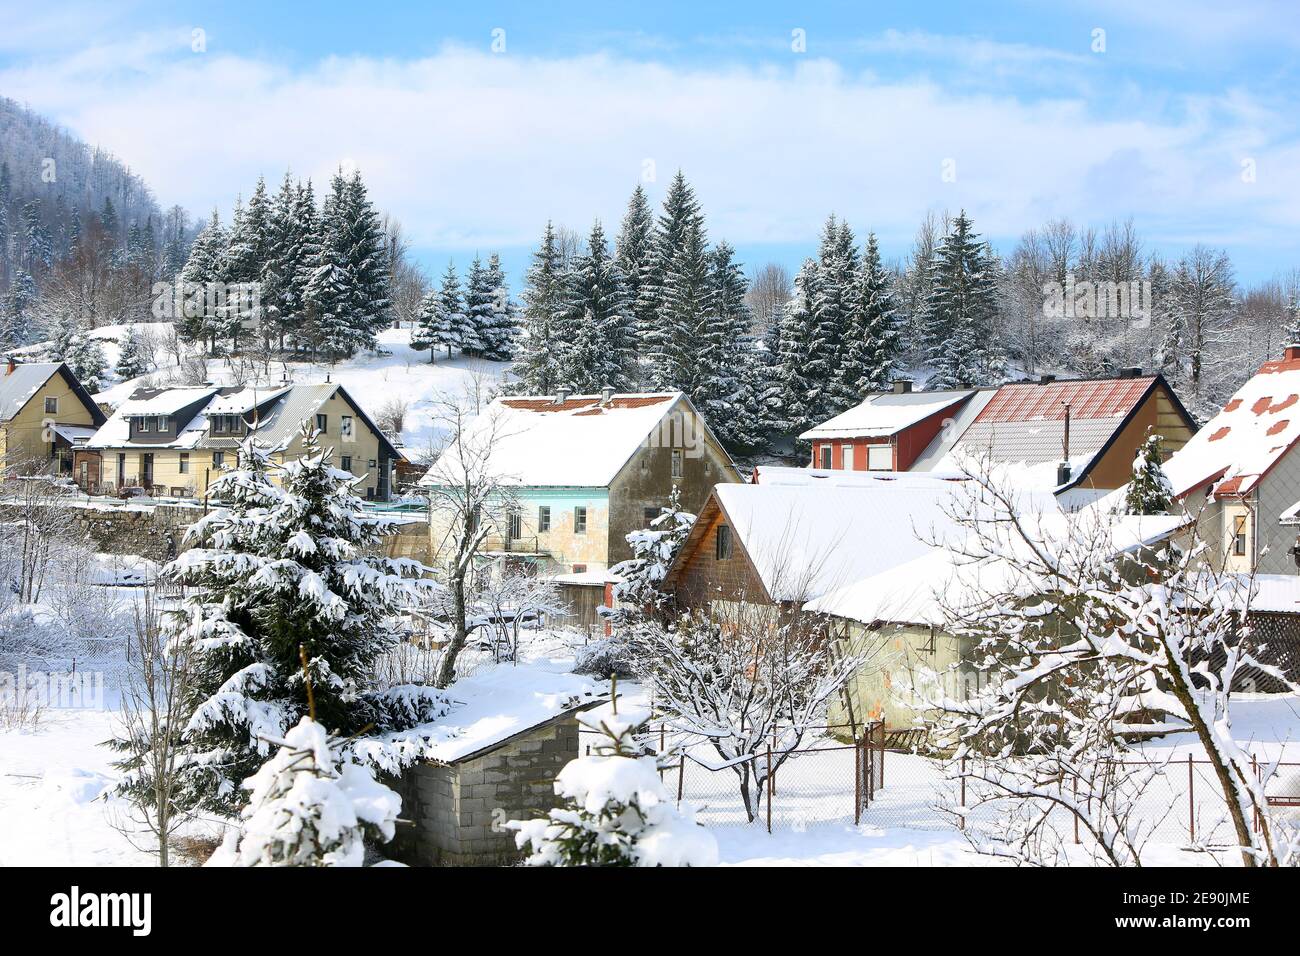 (210201) -- LOKVE (CROATIA), Feb. 1, 2021 (Xinhua) -- Photo taken on Feb. 1, 2021 shows the winter scenery of Lokve, western Croatia's mountainous Gorski Kotar region. (Kristina Stedul Fabac/Pixsell via Xinhua) Stock Photo